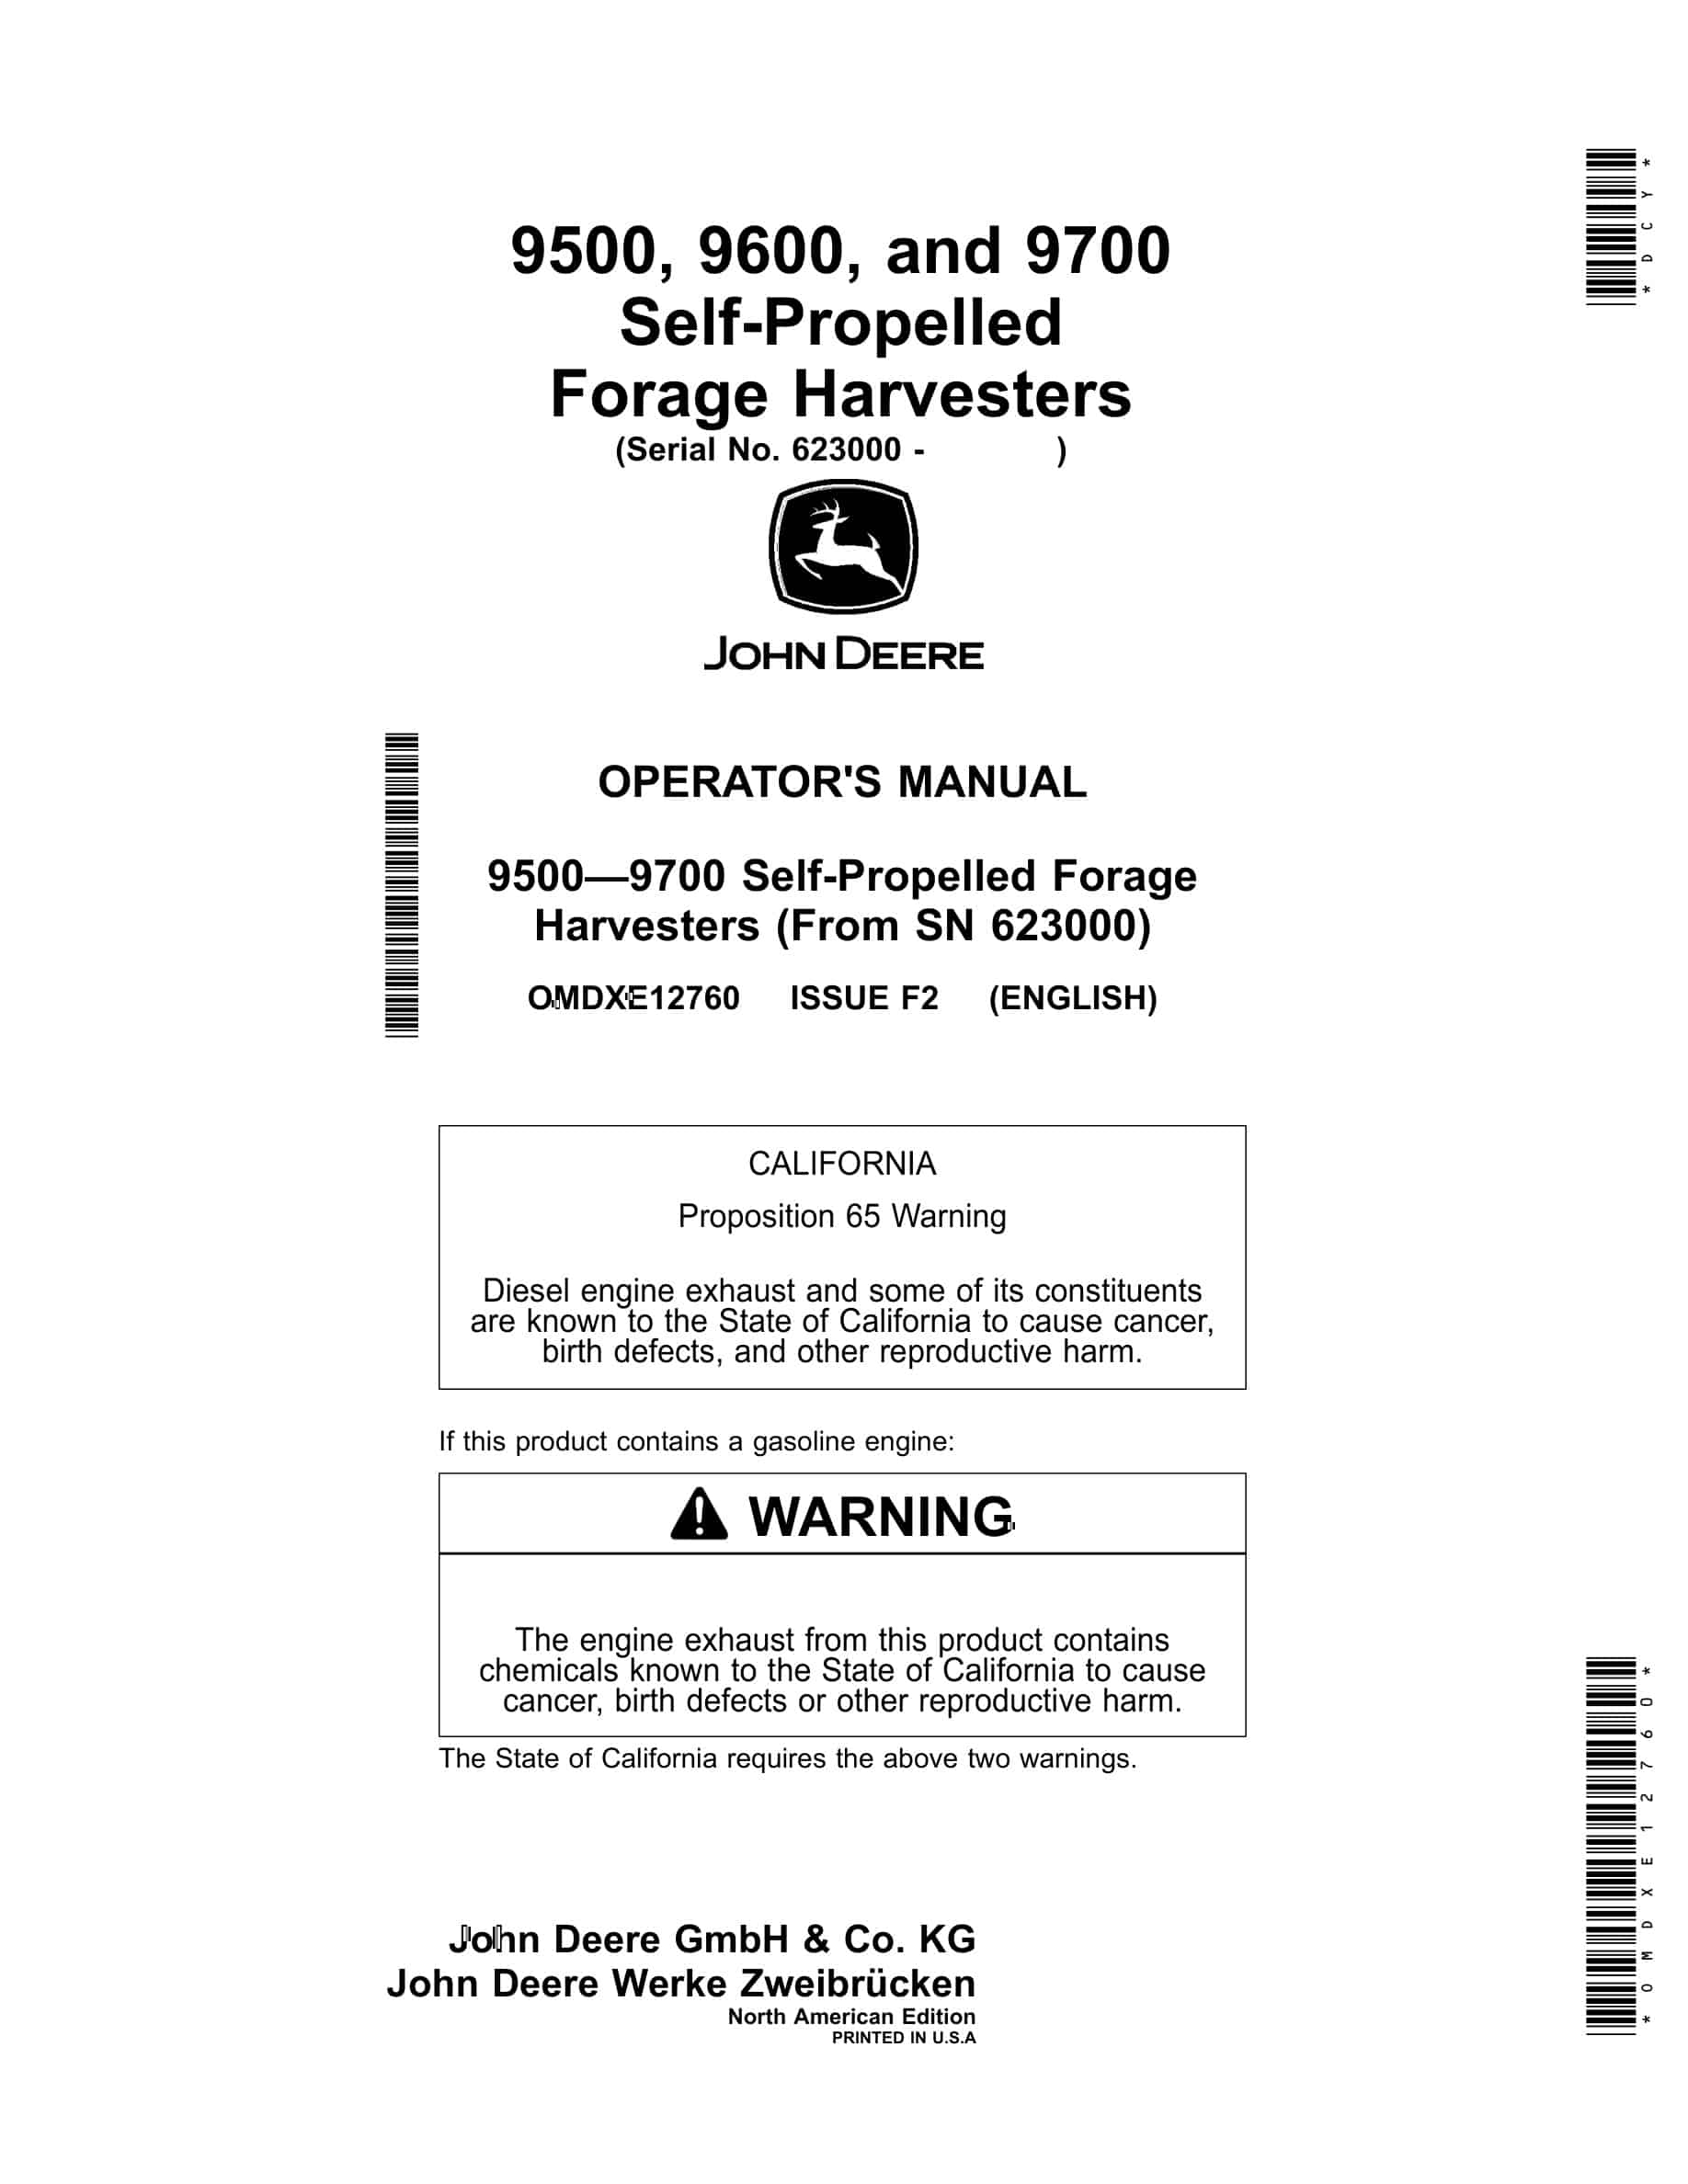 John Deere 9500, 9600, and 9700 Self-Propelled Forage Harvester Operator Manual OMDXE12760-1